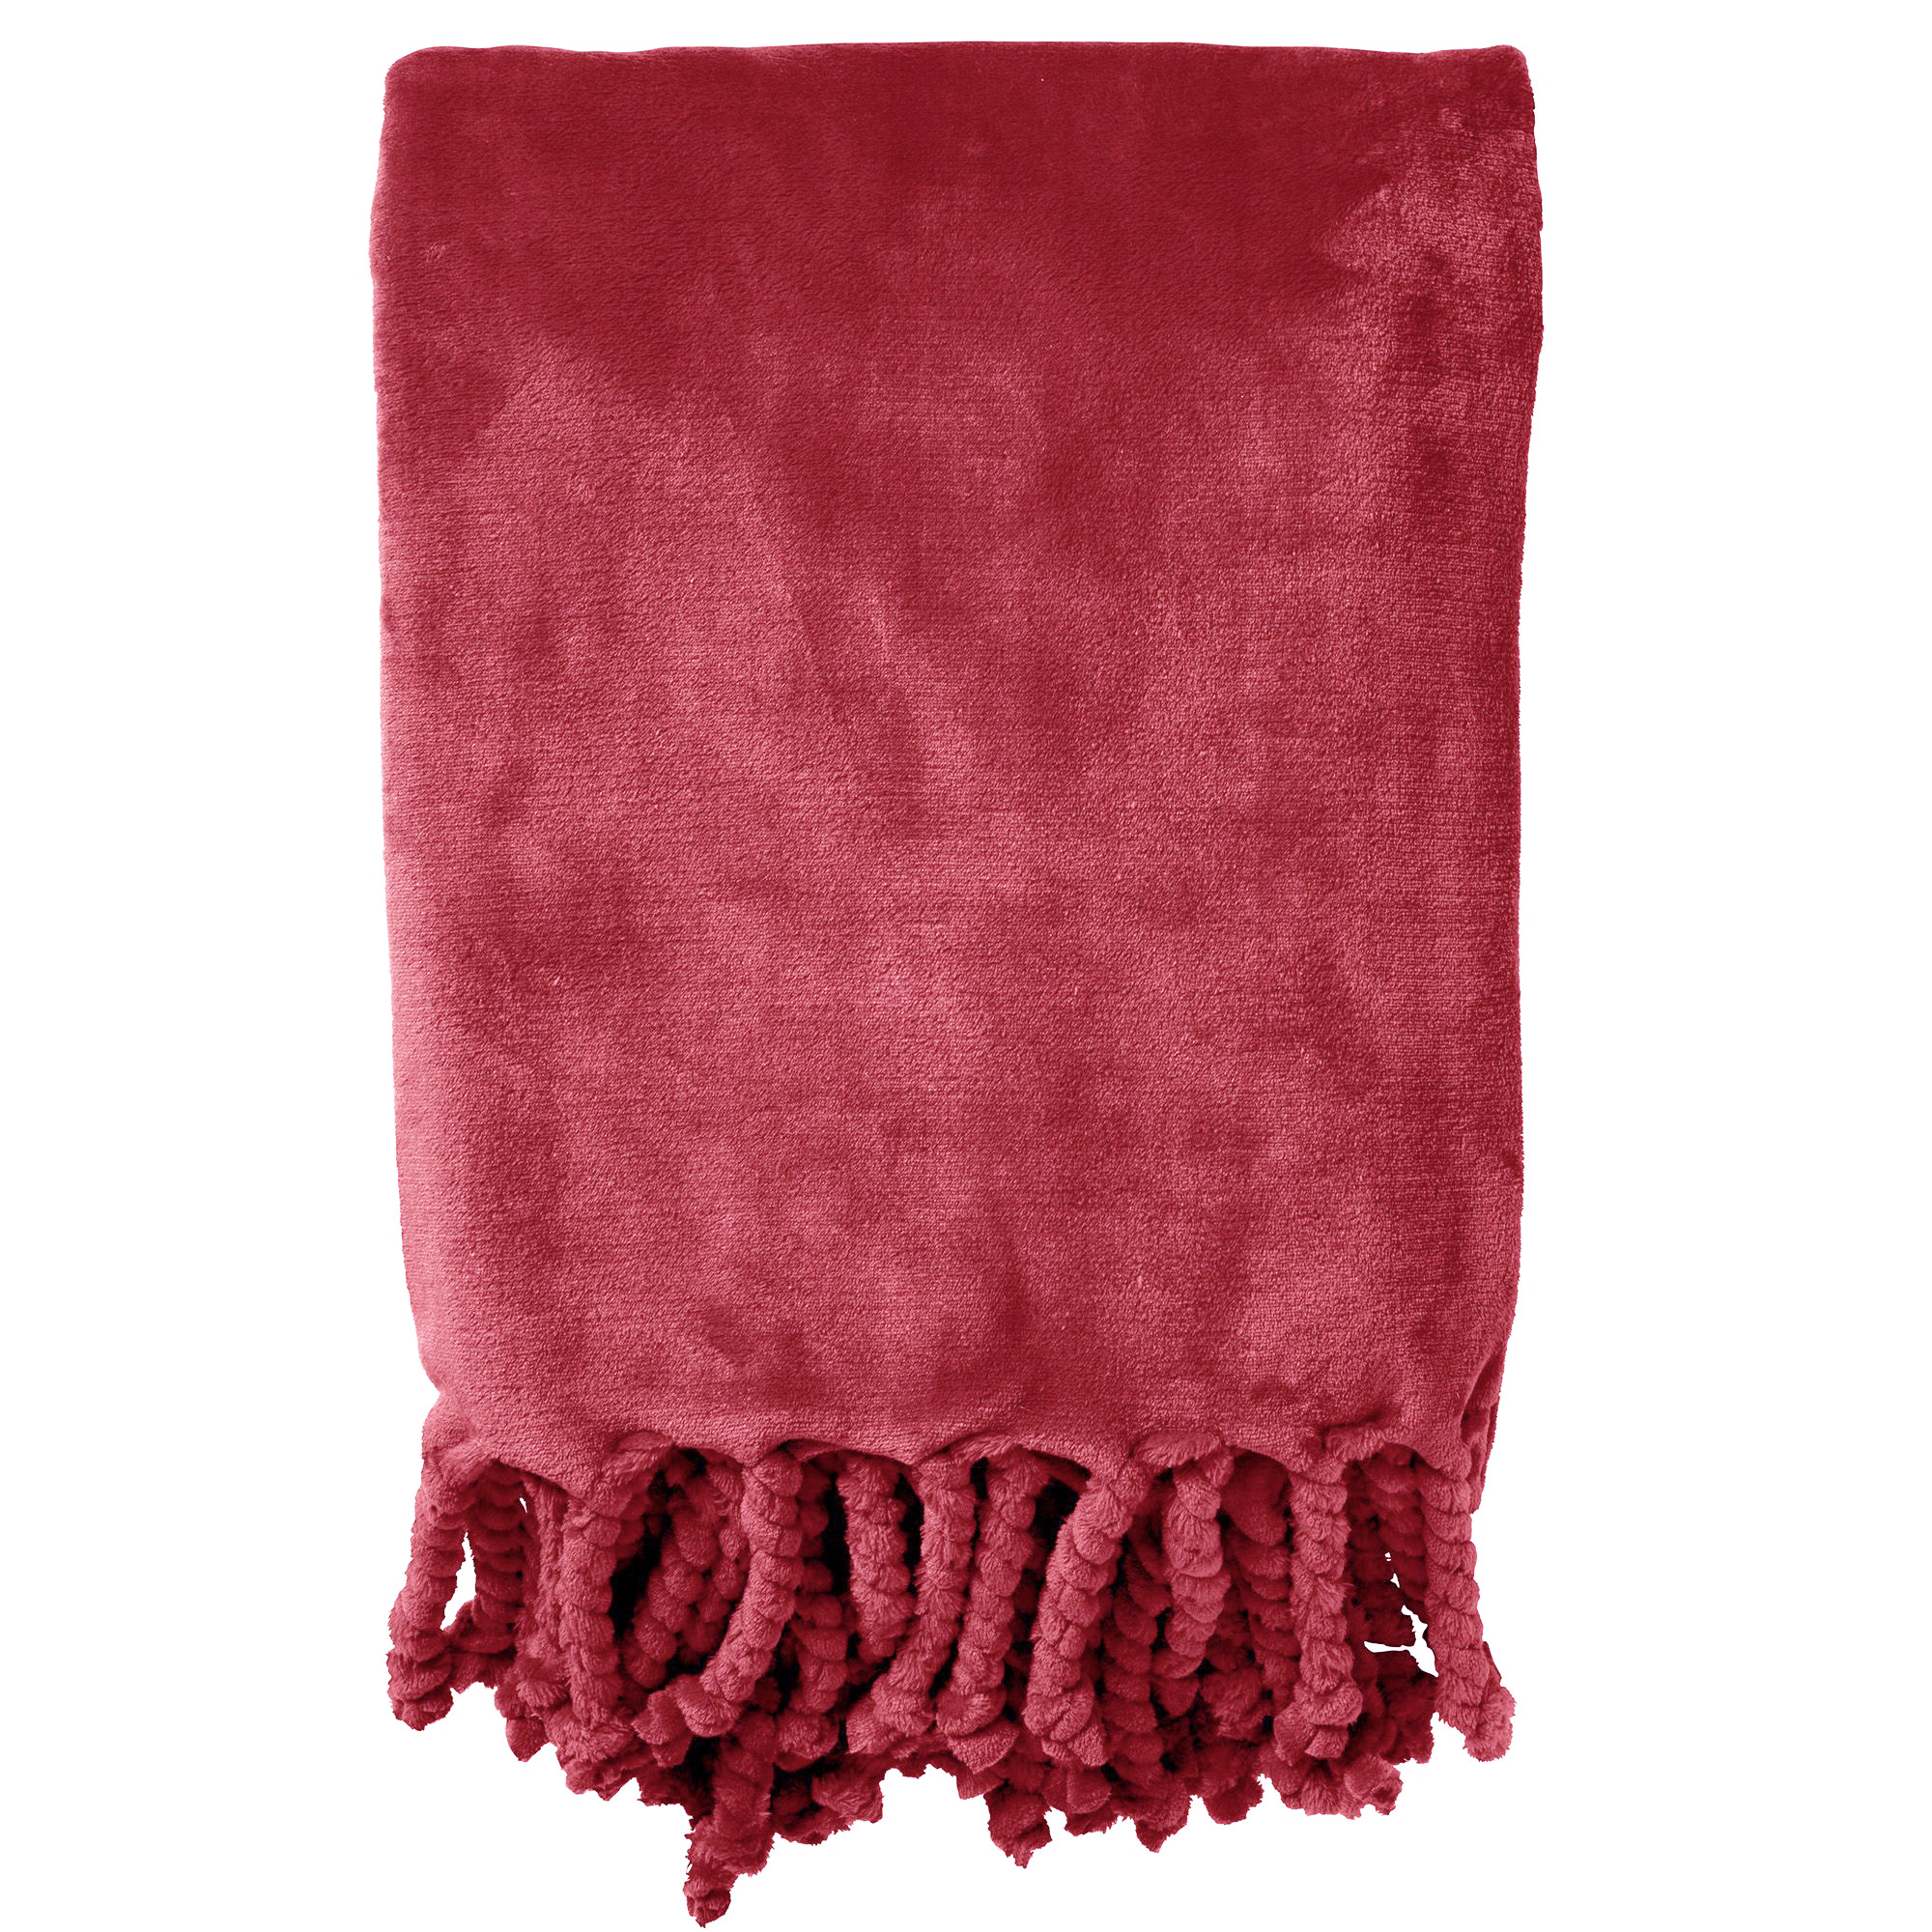 FLORIJN - Plaid 150x200 cm - grote fleece plaid met flosjes - Merlot - bordeaux rood